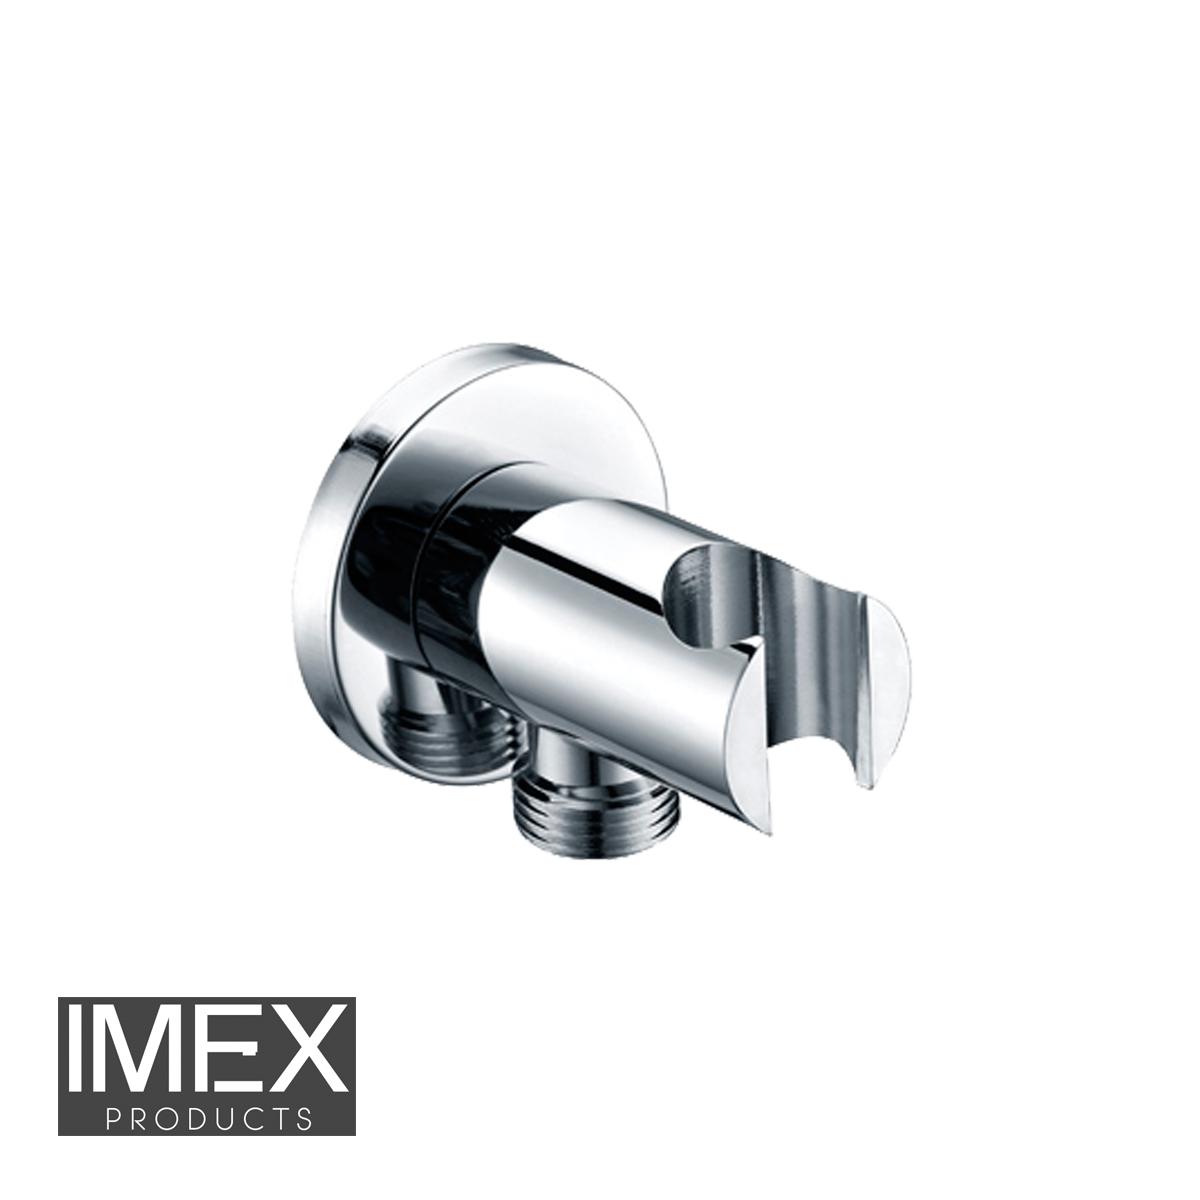 Soporte de ducha IMEX con toma 1/2" Redondo cromo SFD002